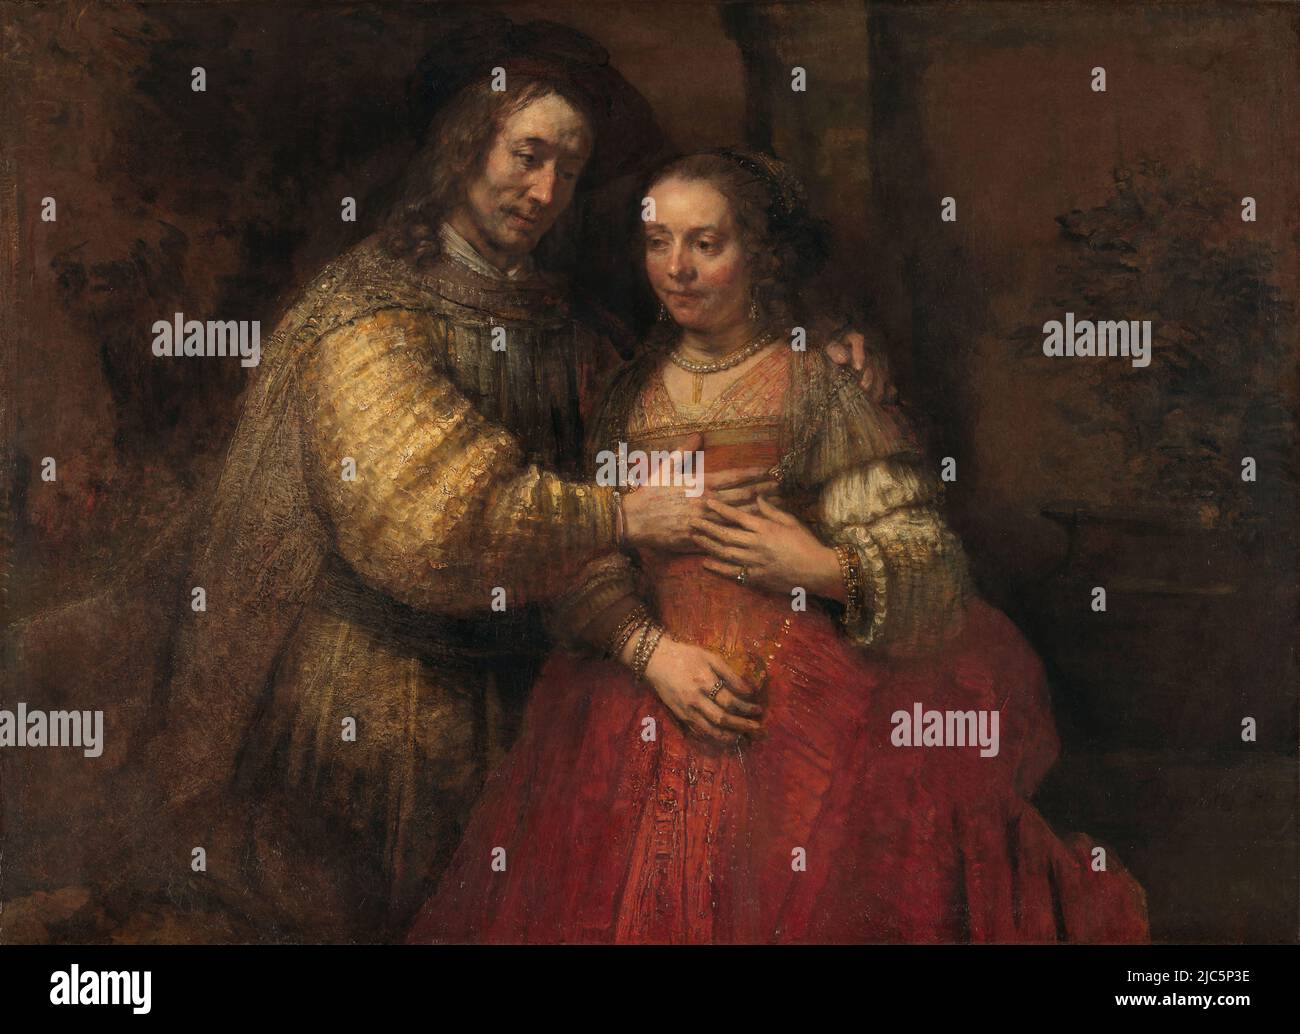 Isaac e Rebecca, noti come ‘la sposa Ebraica’ Ritratto di una coppia come Isaac e Rebecca, noti come ‘la sposa Ebraica’. Rembrandt van Rijn. c. 1665 - c. 1669 Foto Stock